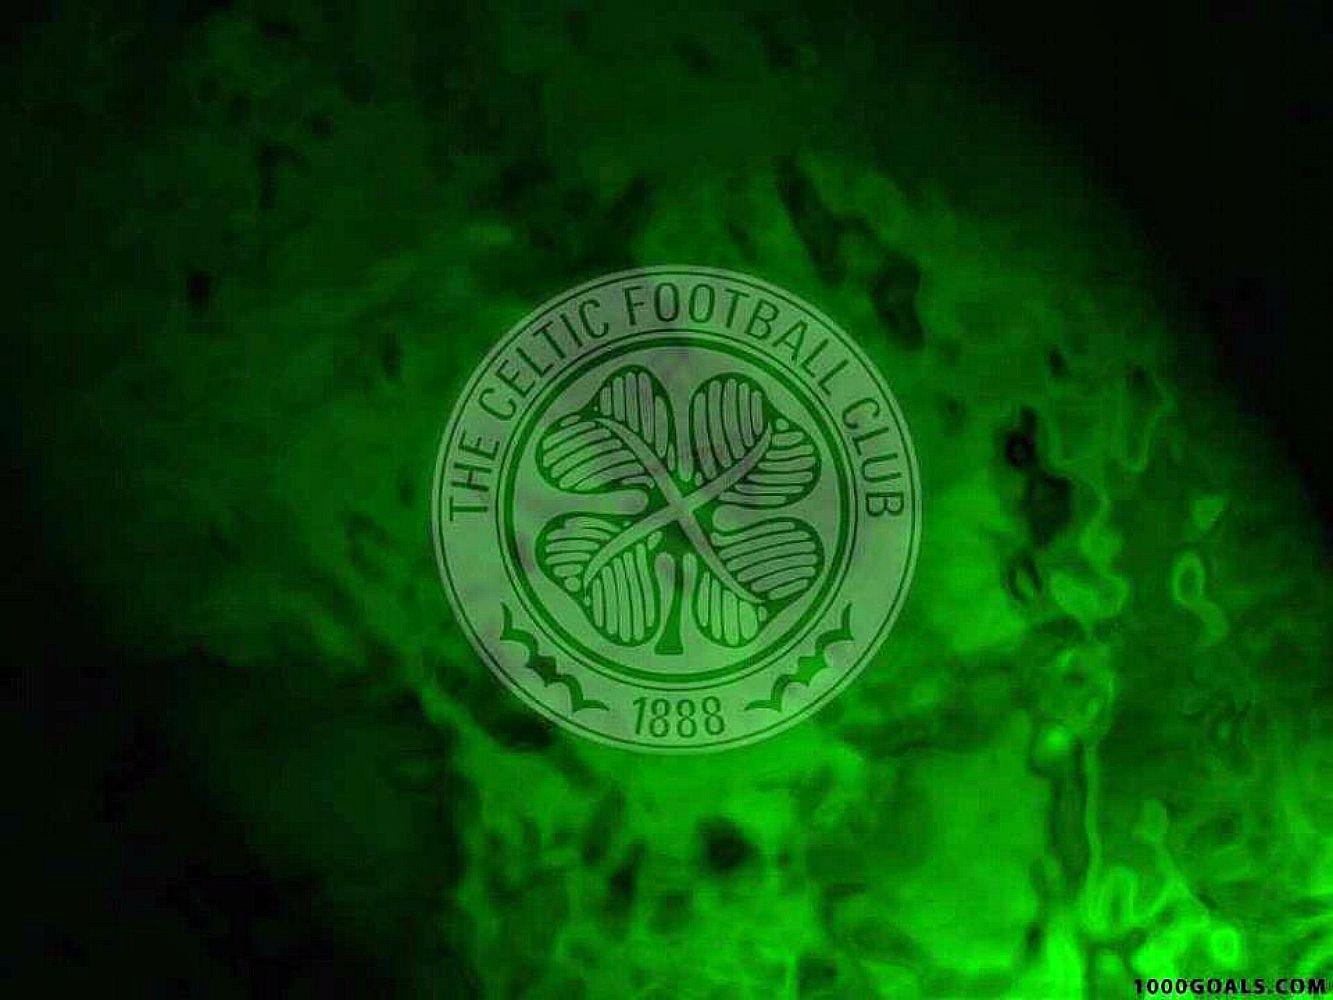 Beautiful Celtic Fc Wallpaper iPhone. Great Foofball Club